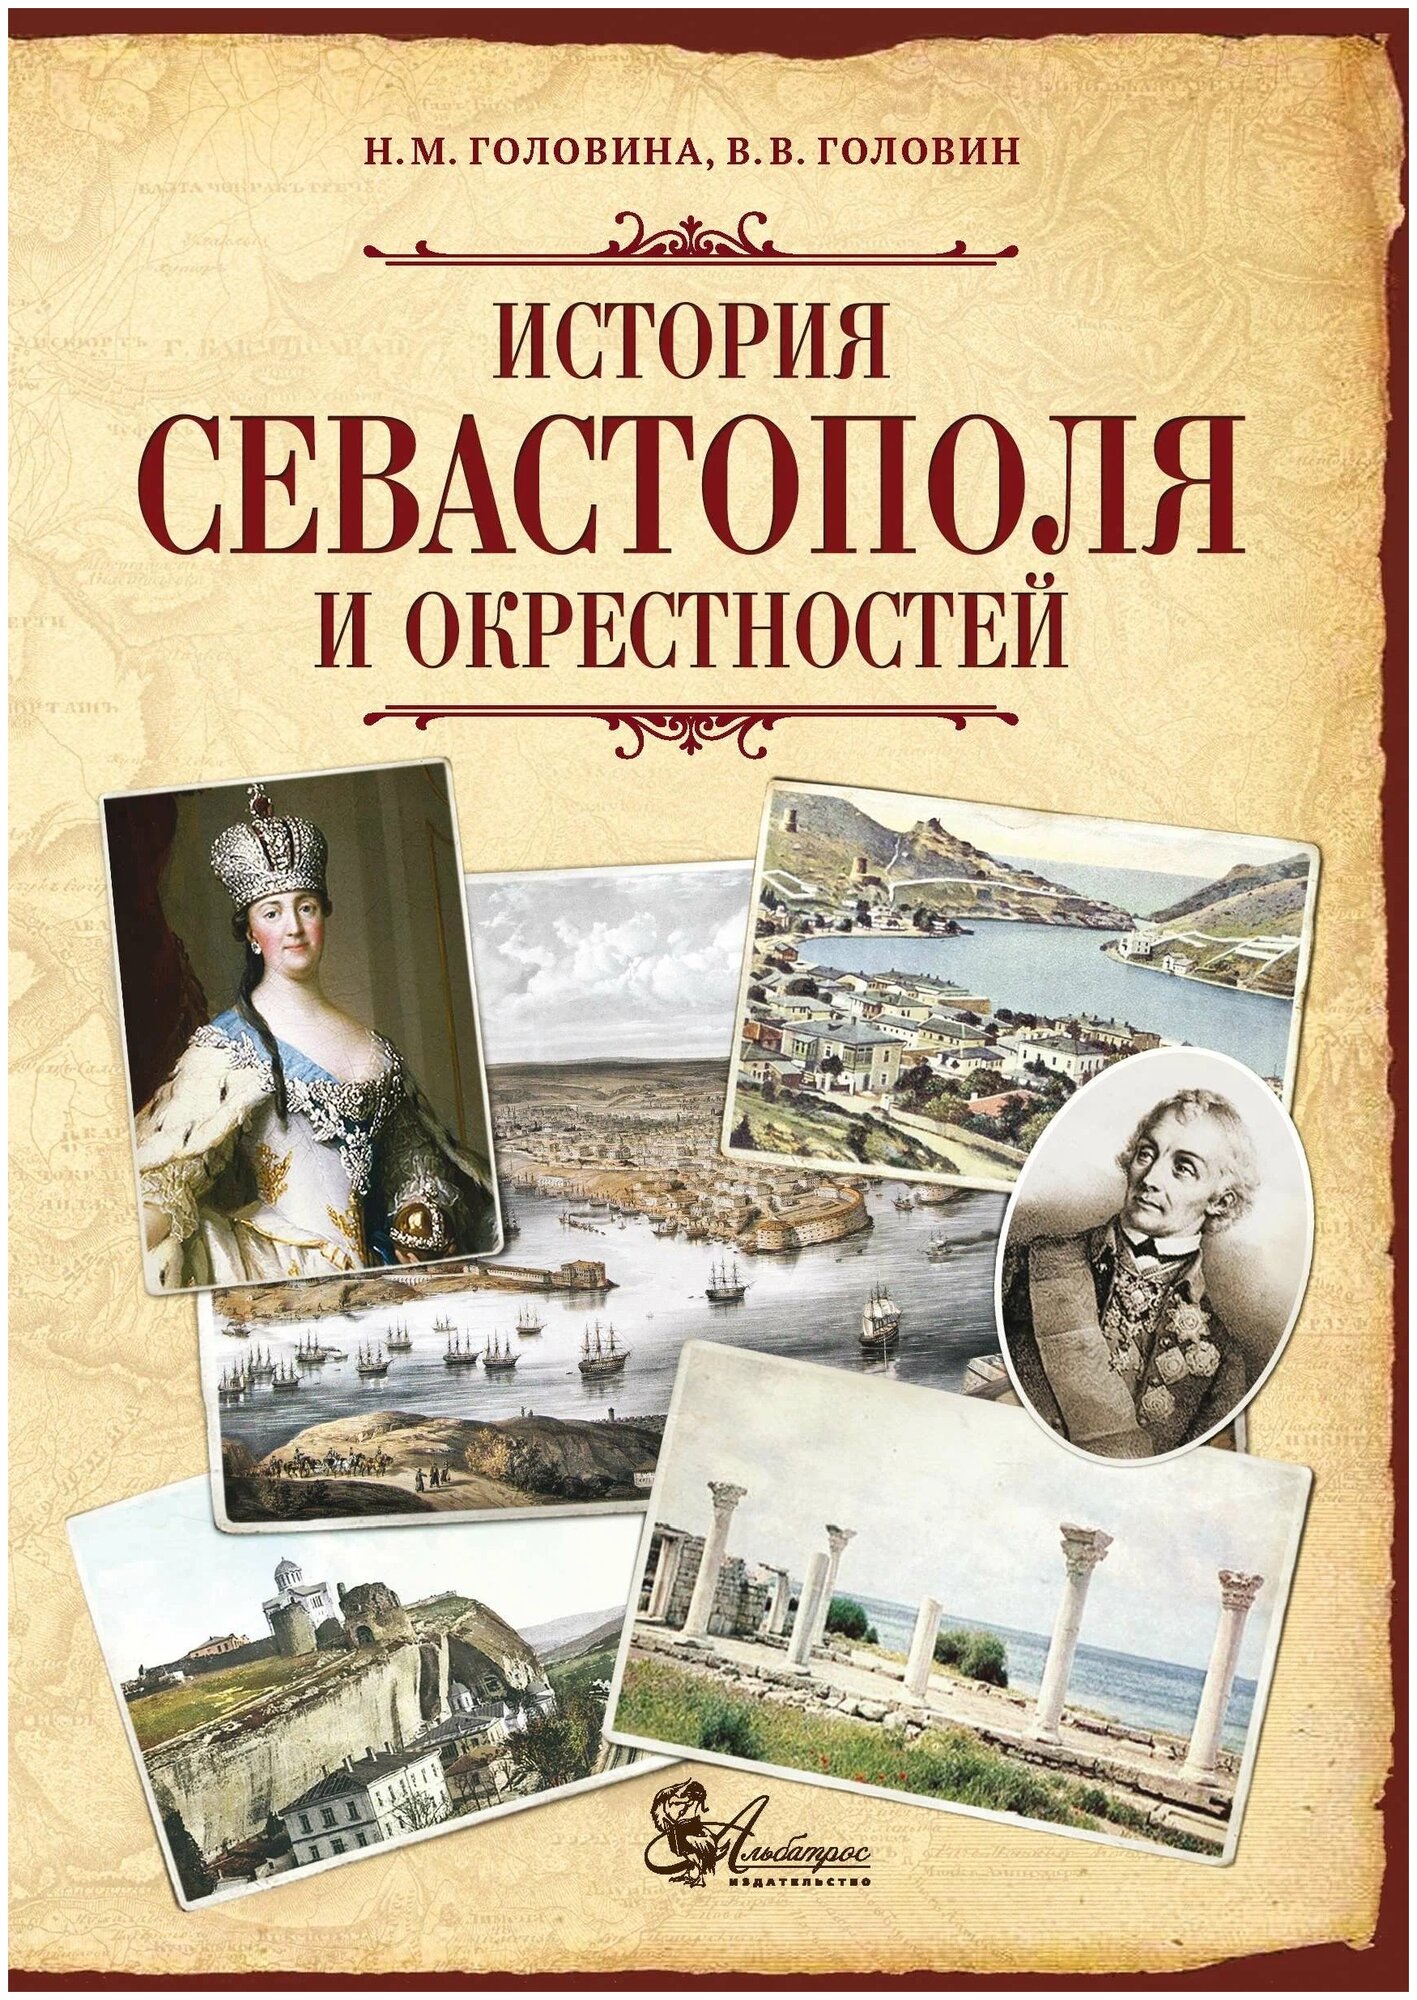 Головина Н.М. Головин В.В. "История Севастополя и окрестностей"